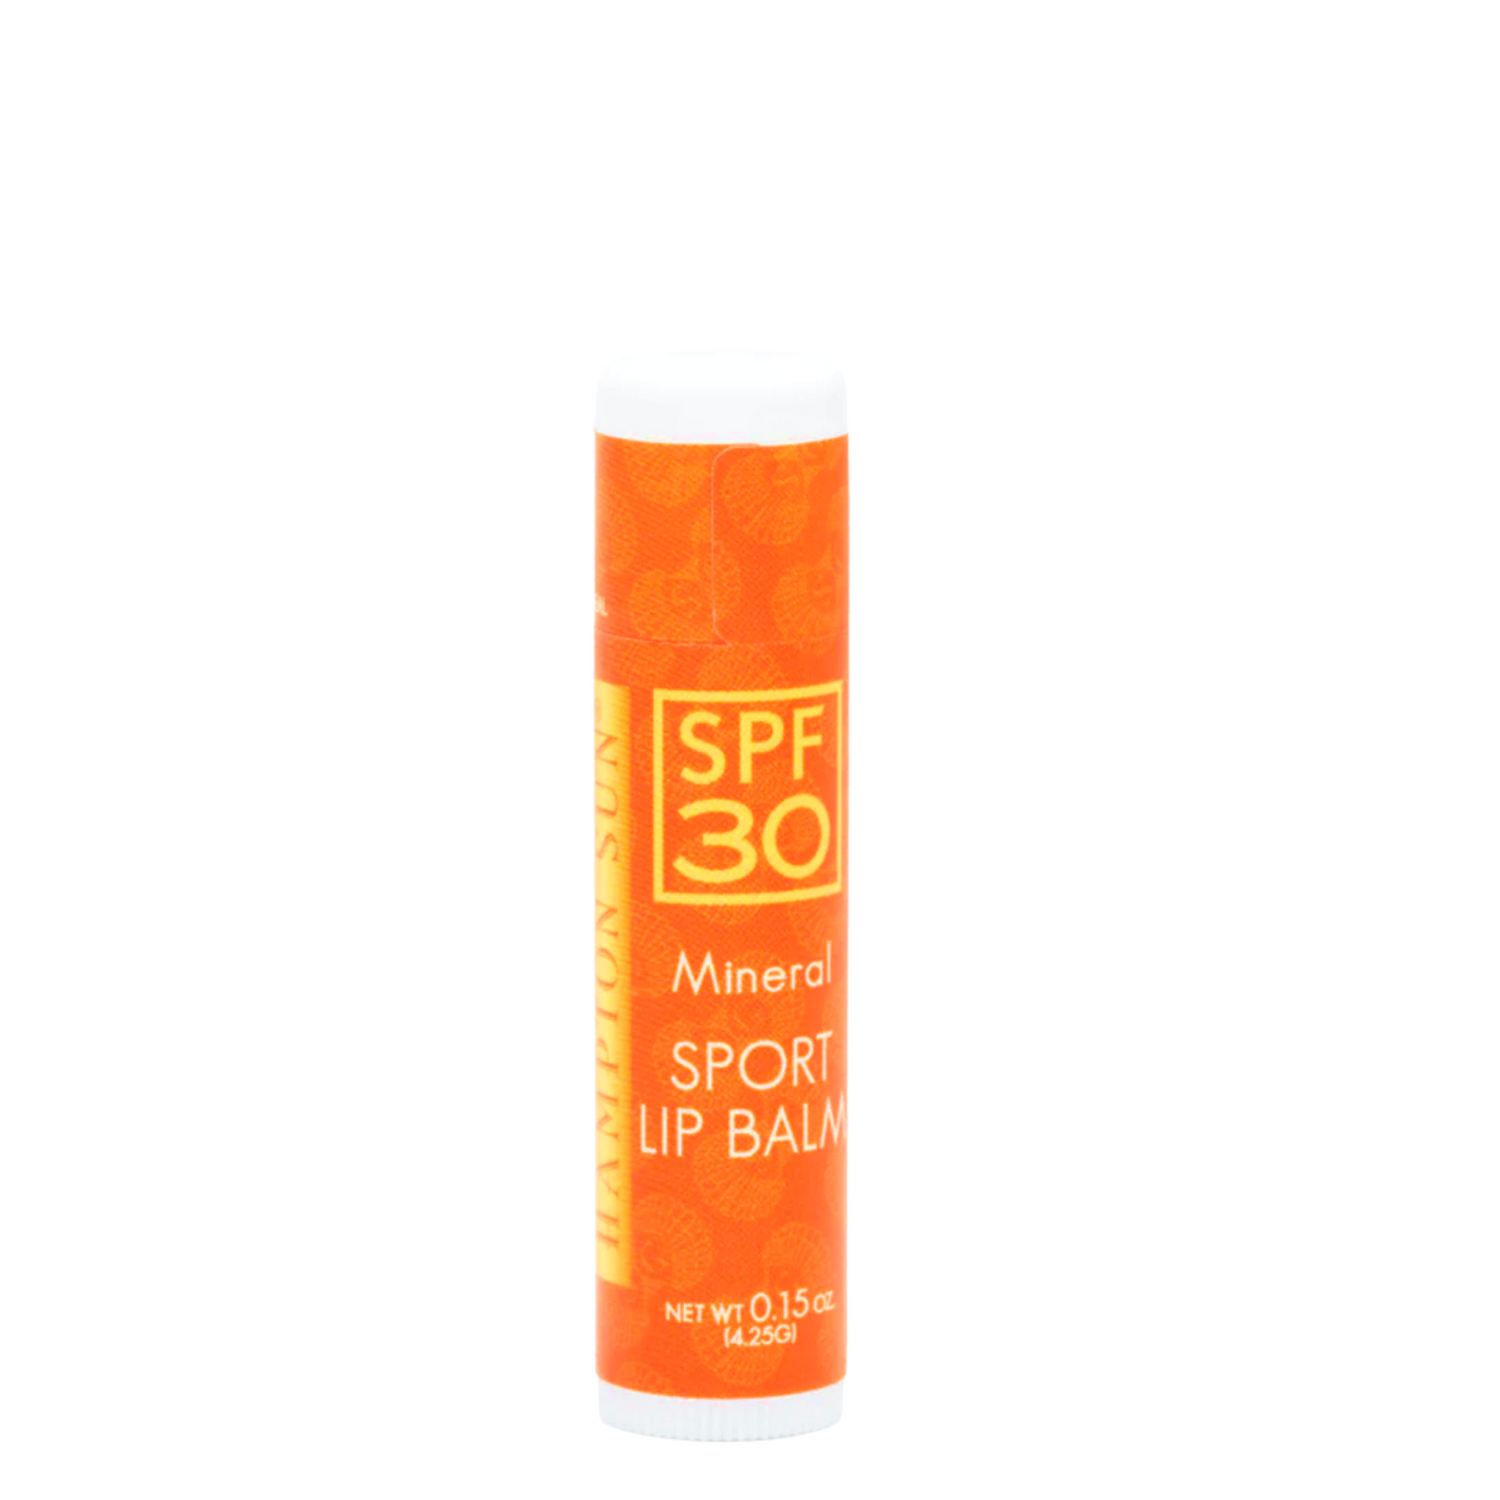 SPF 30 Mineral Sport Lip Balm